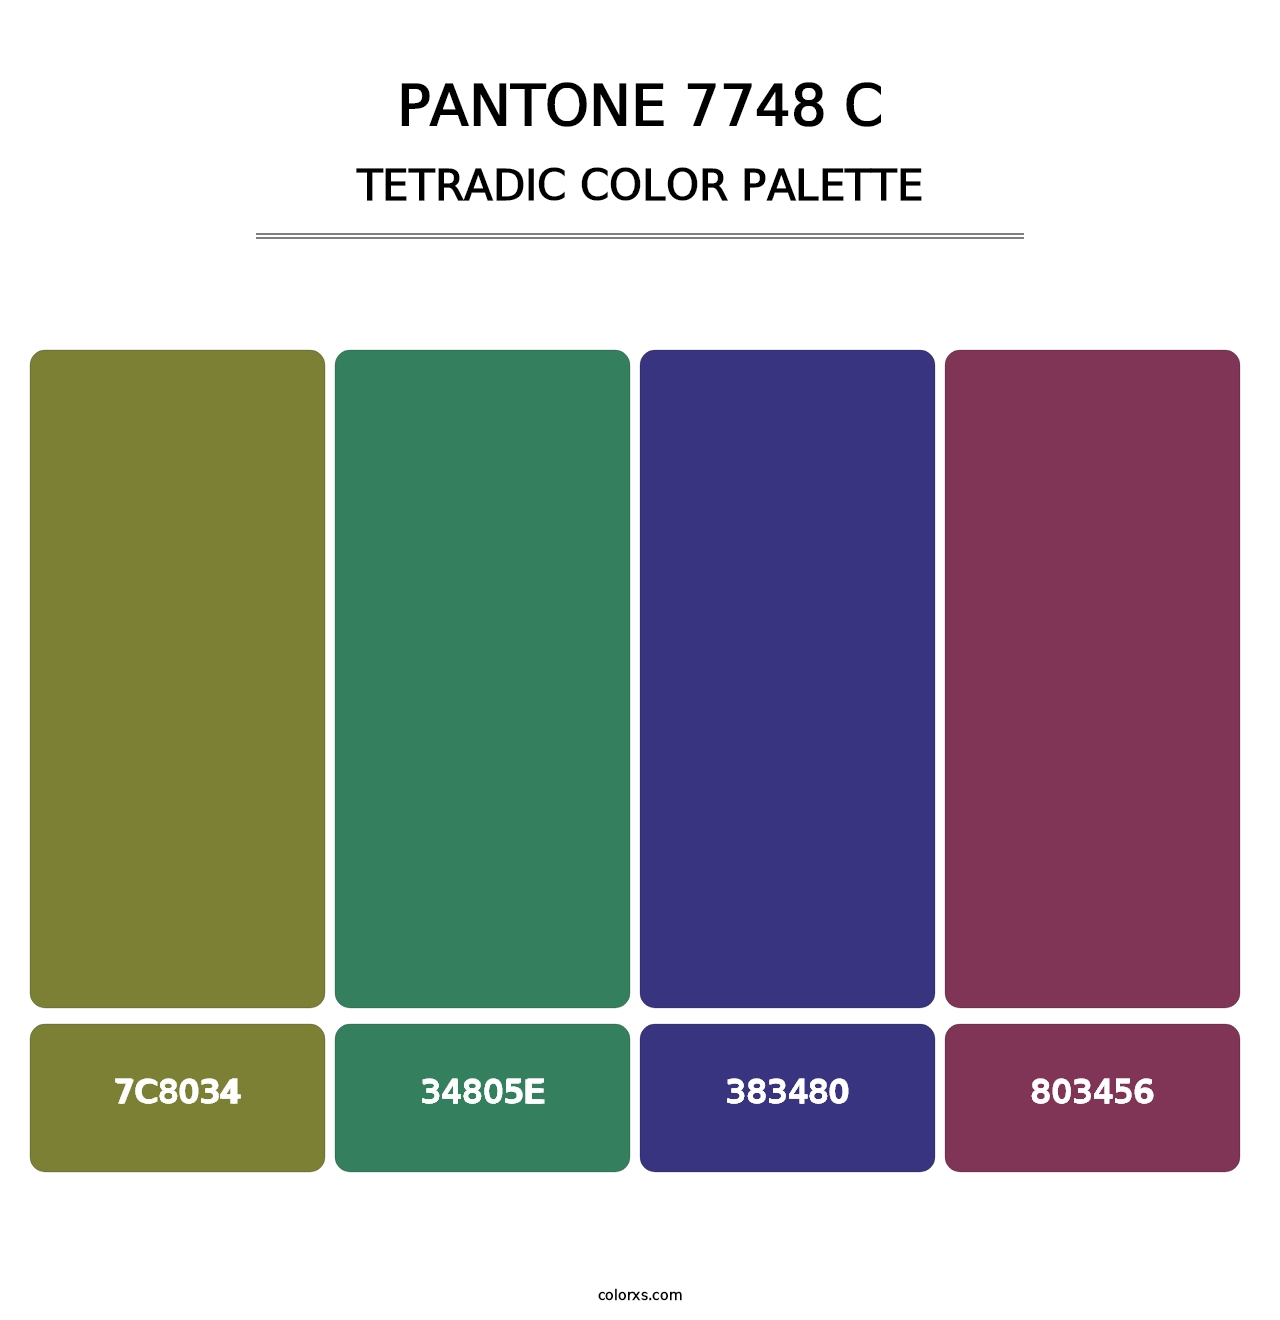 PANTONE 7748 C - Tetradic Color Palette